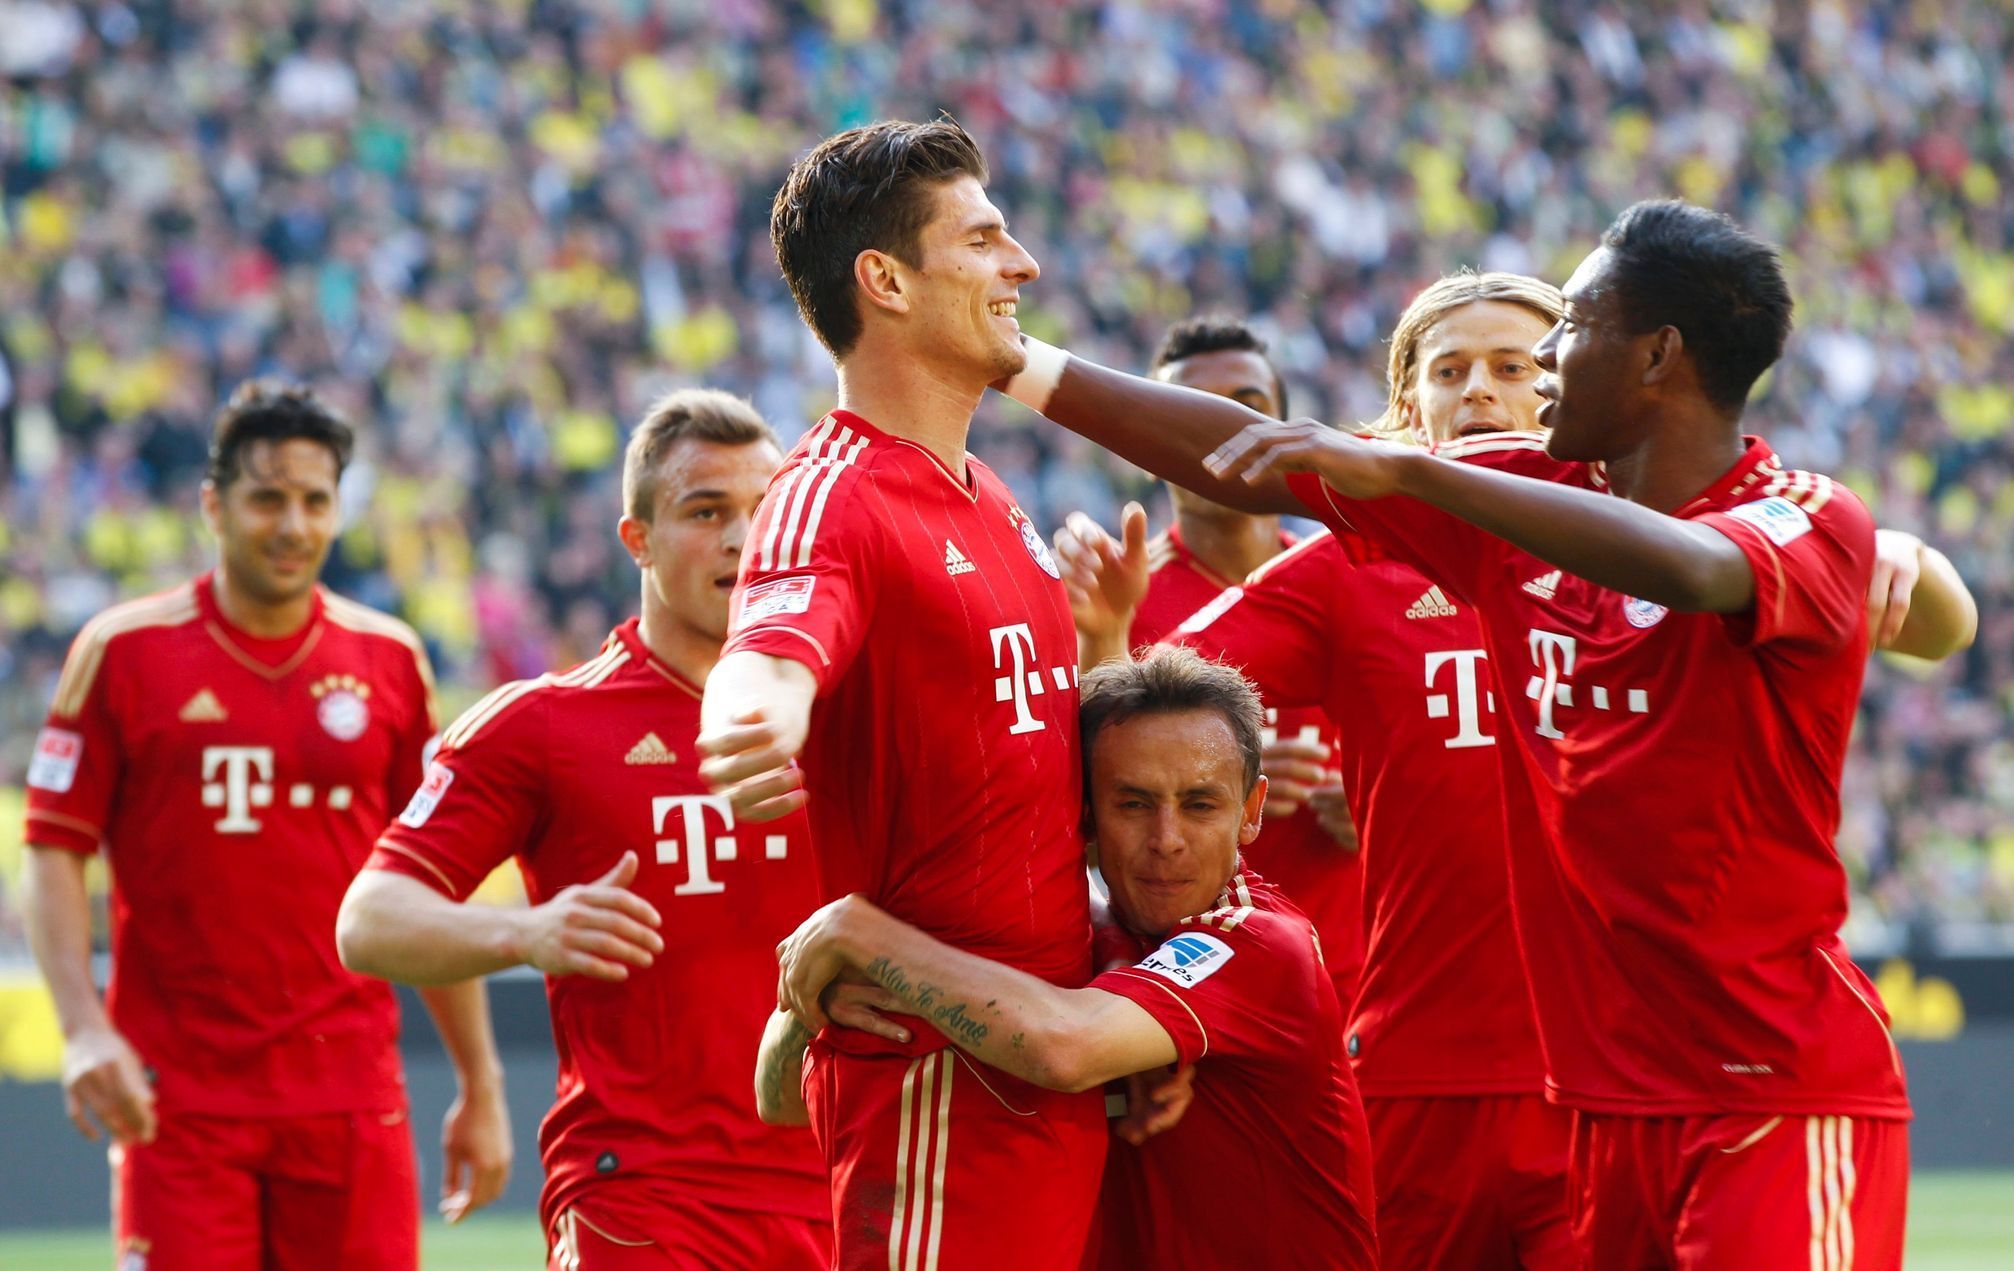 Mario Gomez slaví se svými spoluhráči gól proti Dortmundu